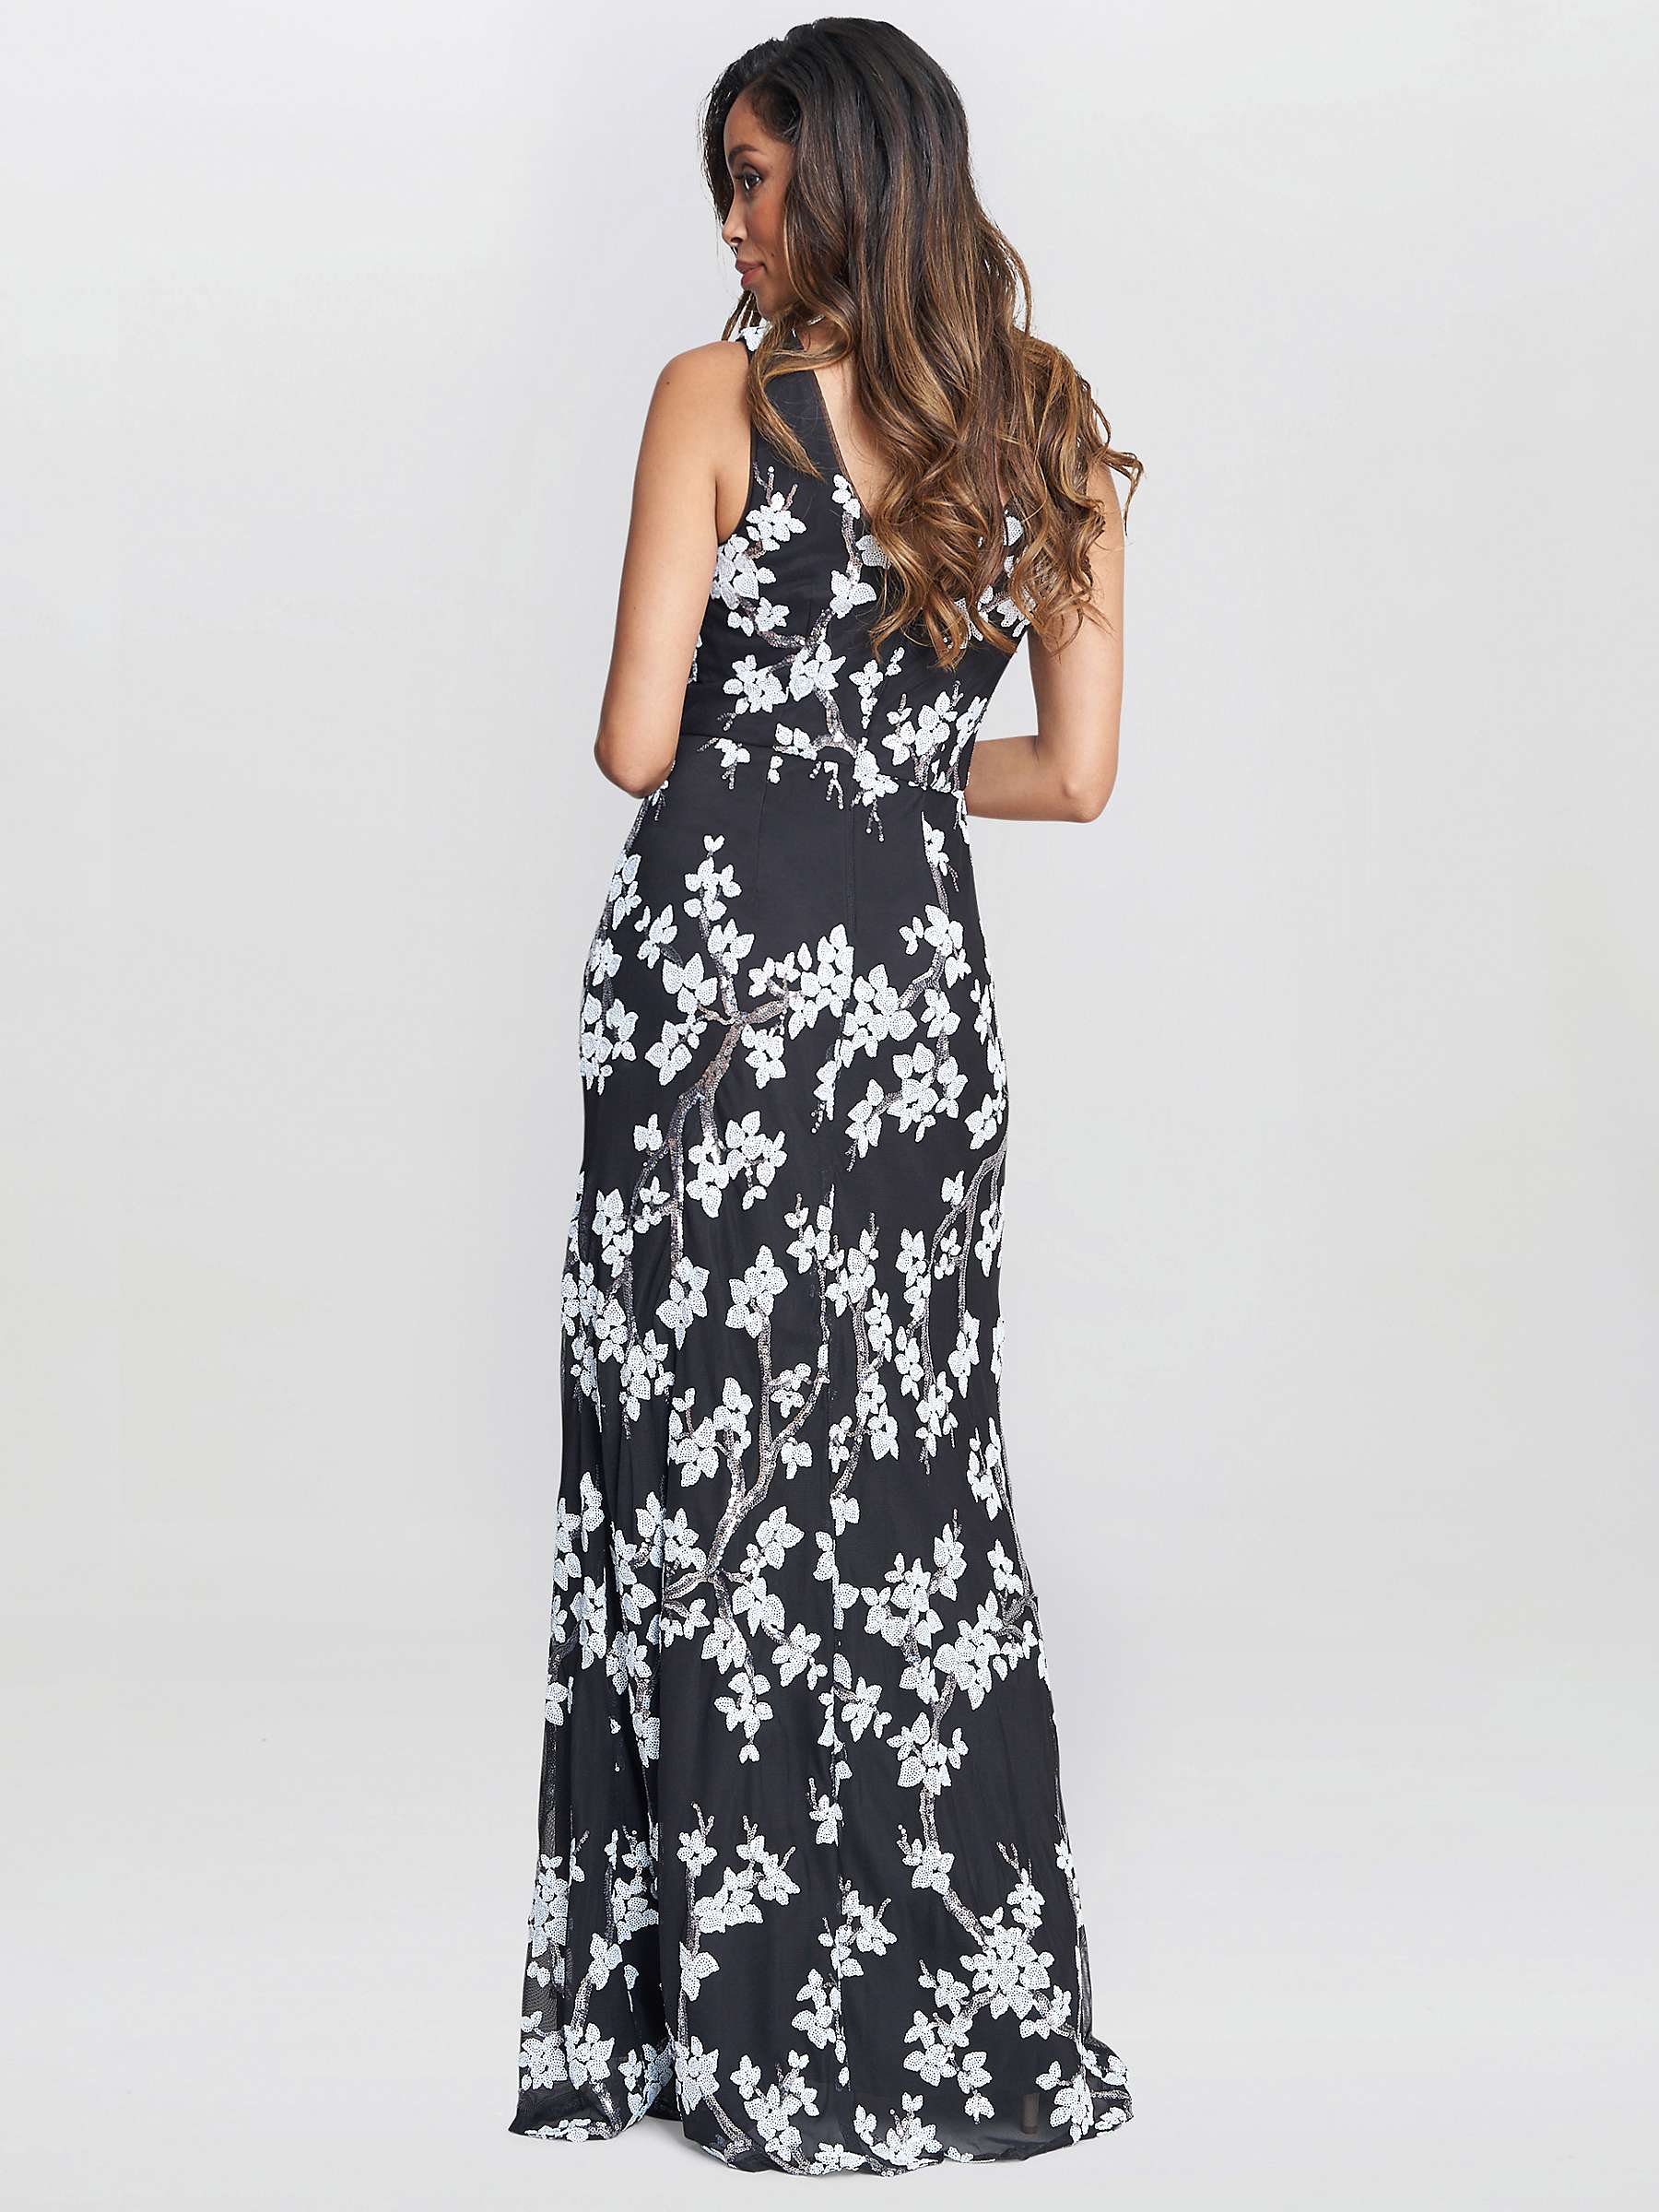 Buy Gina Bacconi Flavia Floral Maxi Dress, Black/White Online at johnlewis.com